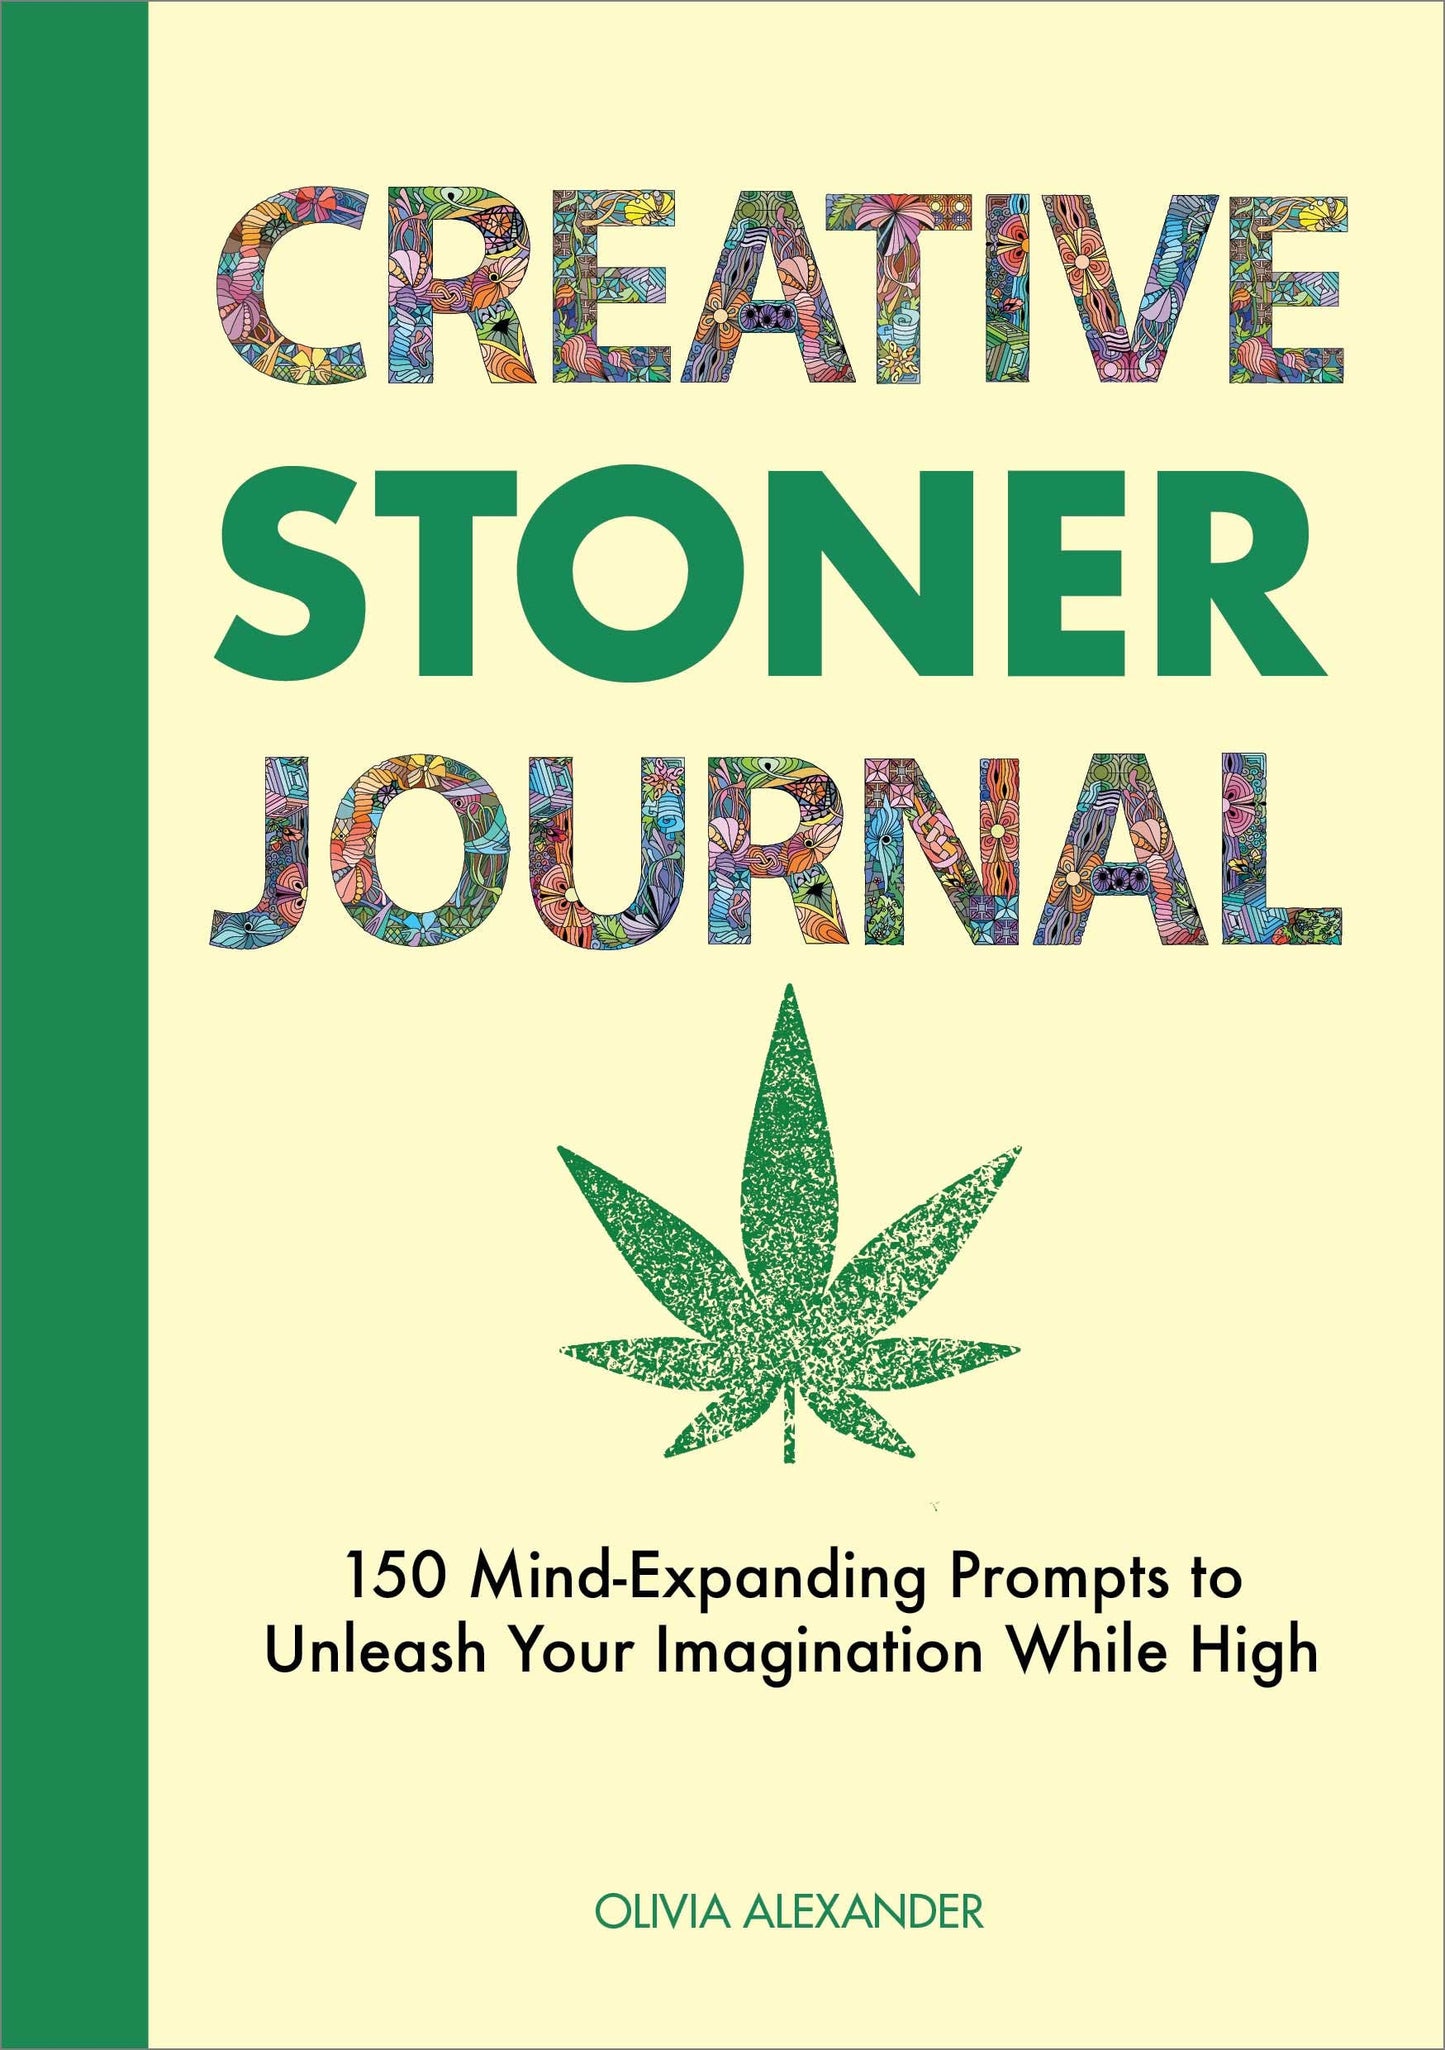 Creative Stoner Journal